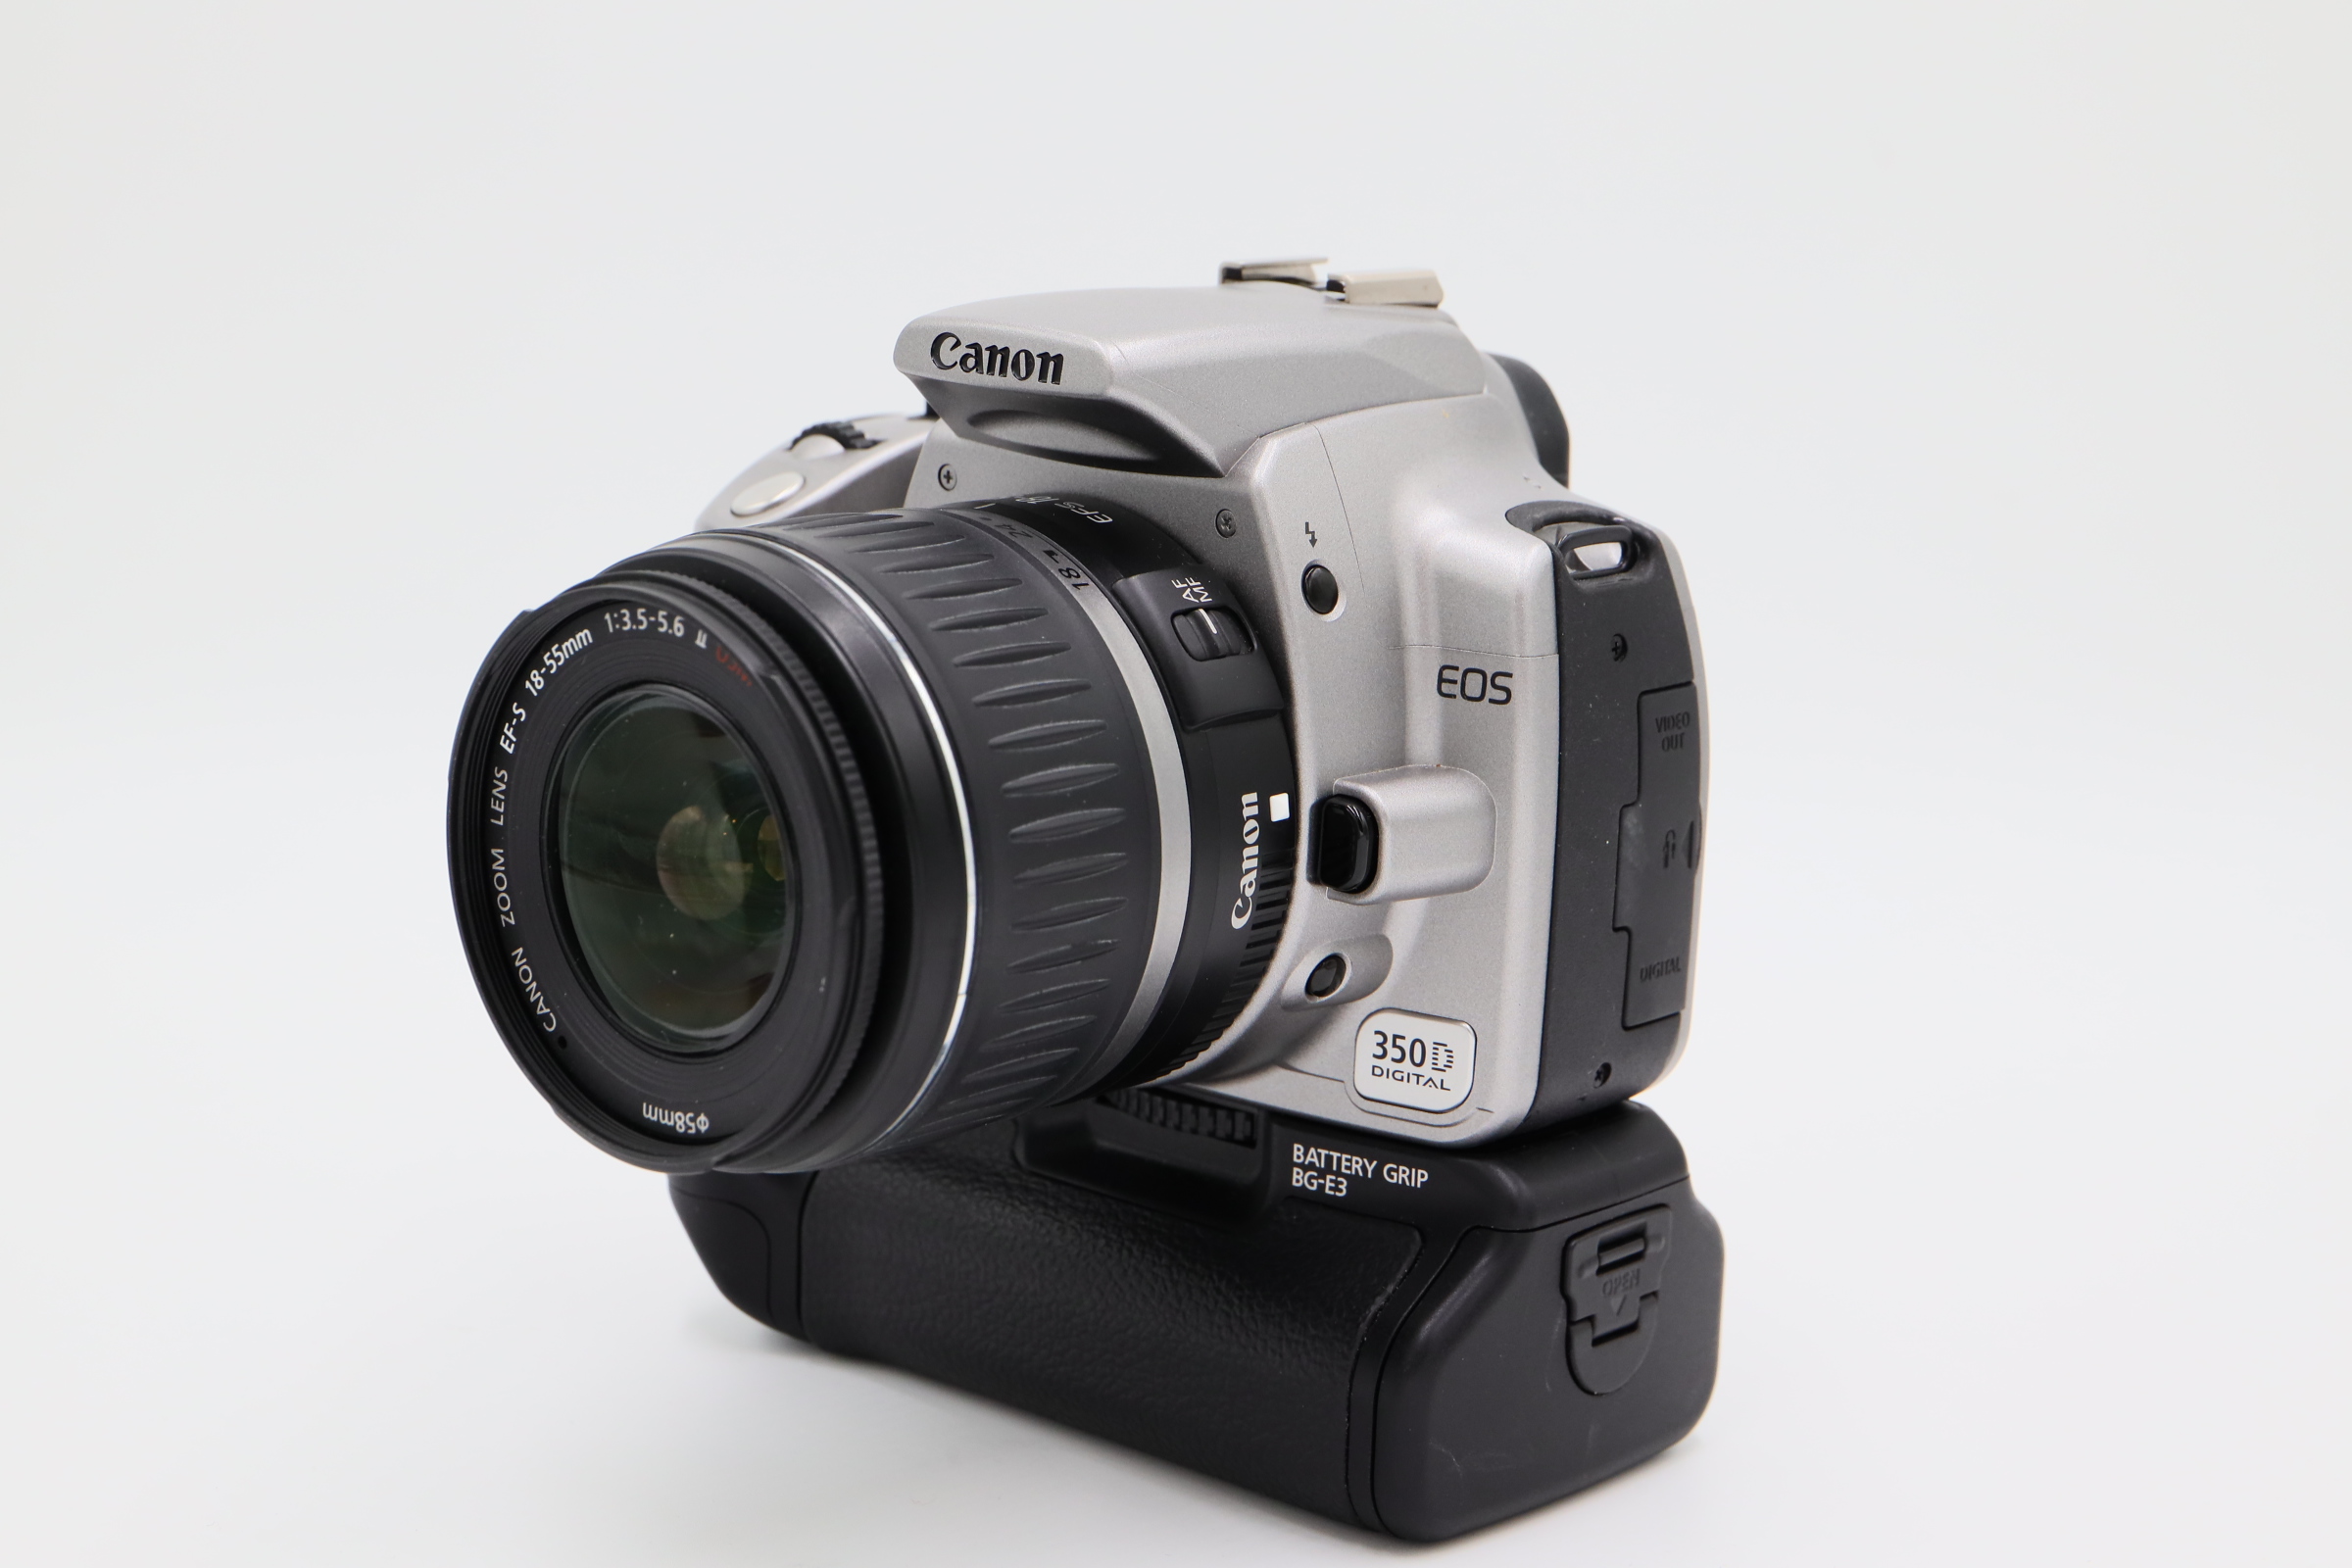 Canon EOS 350d in hands. Canon eos 350d